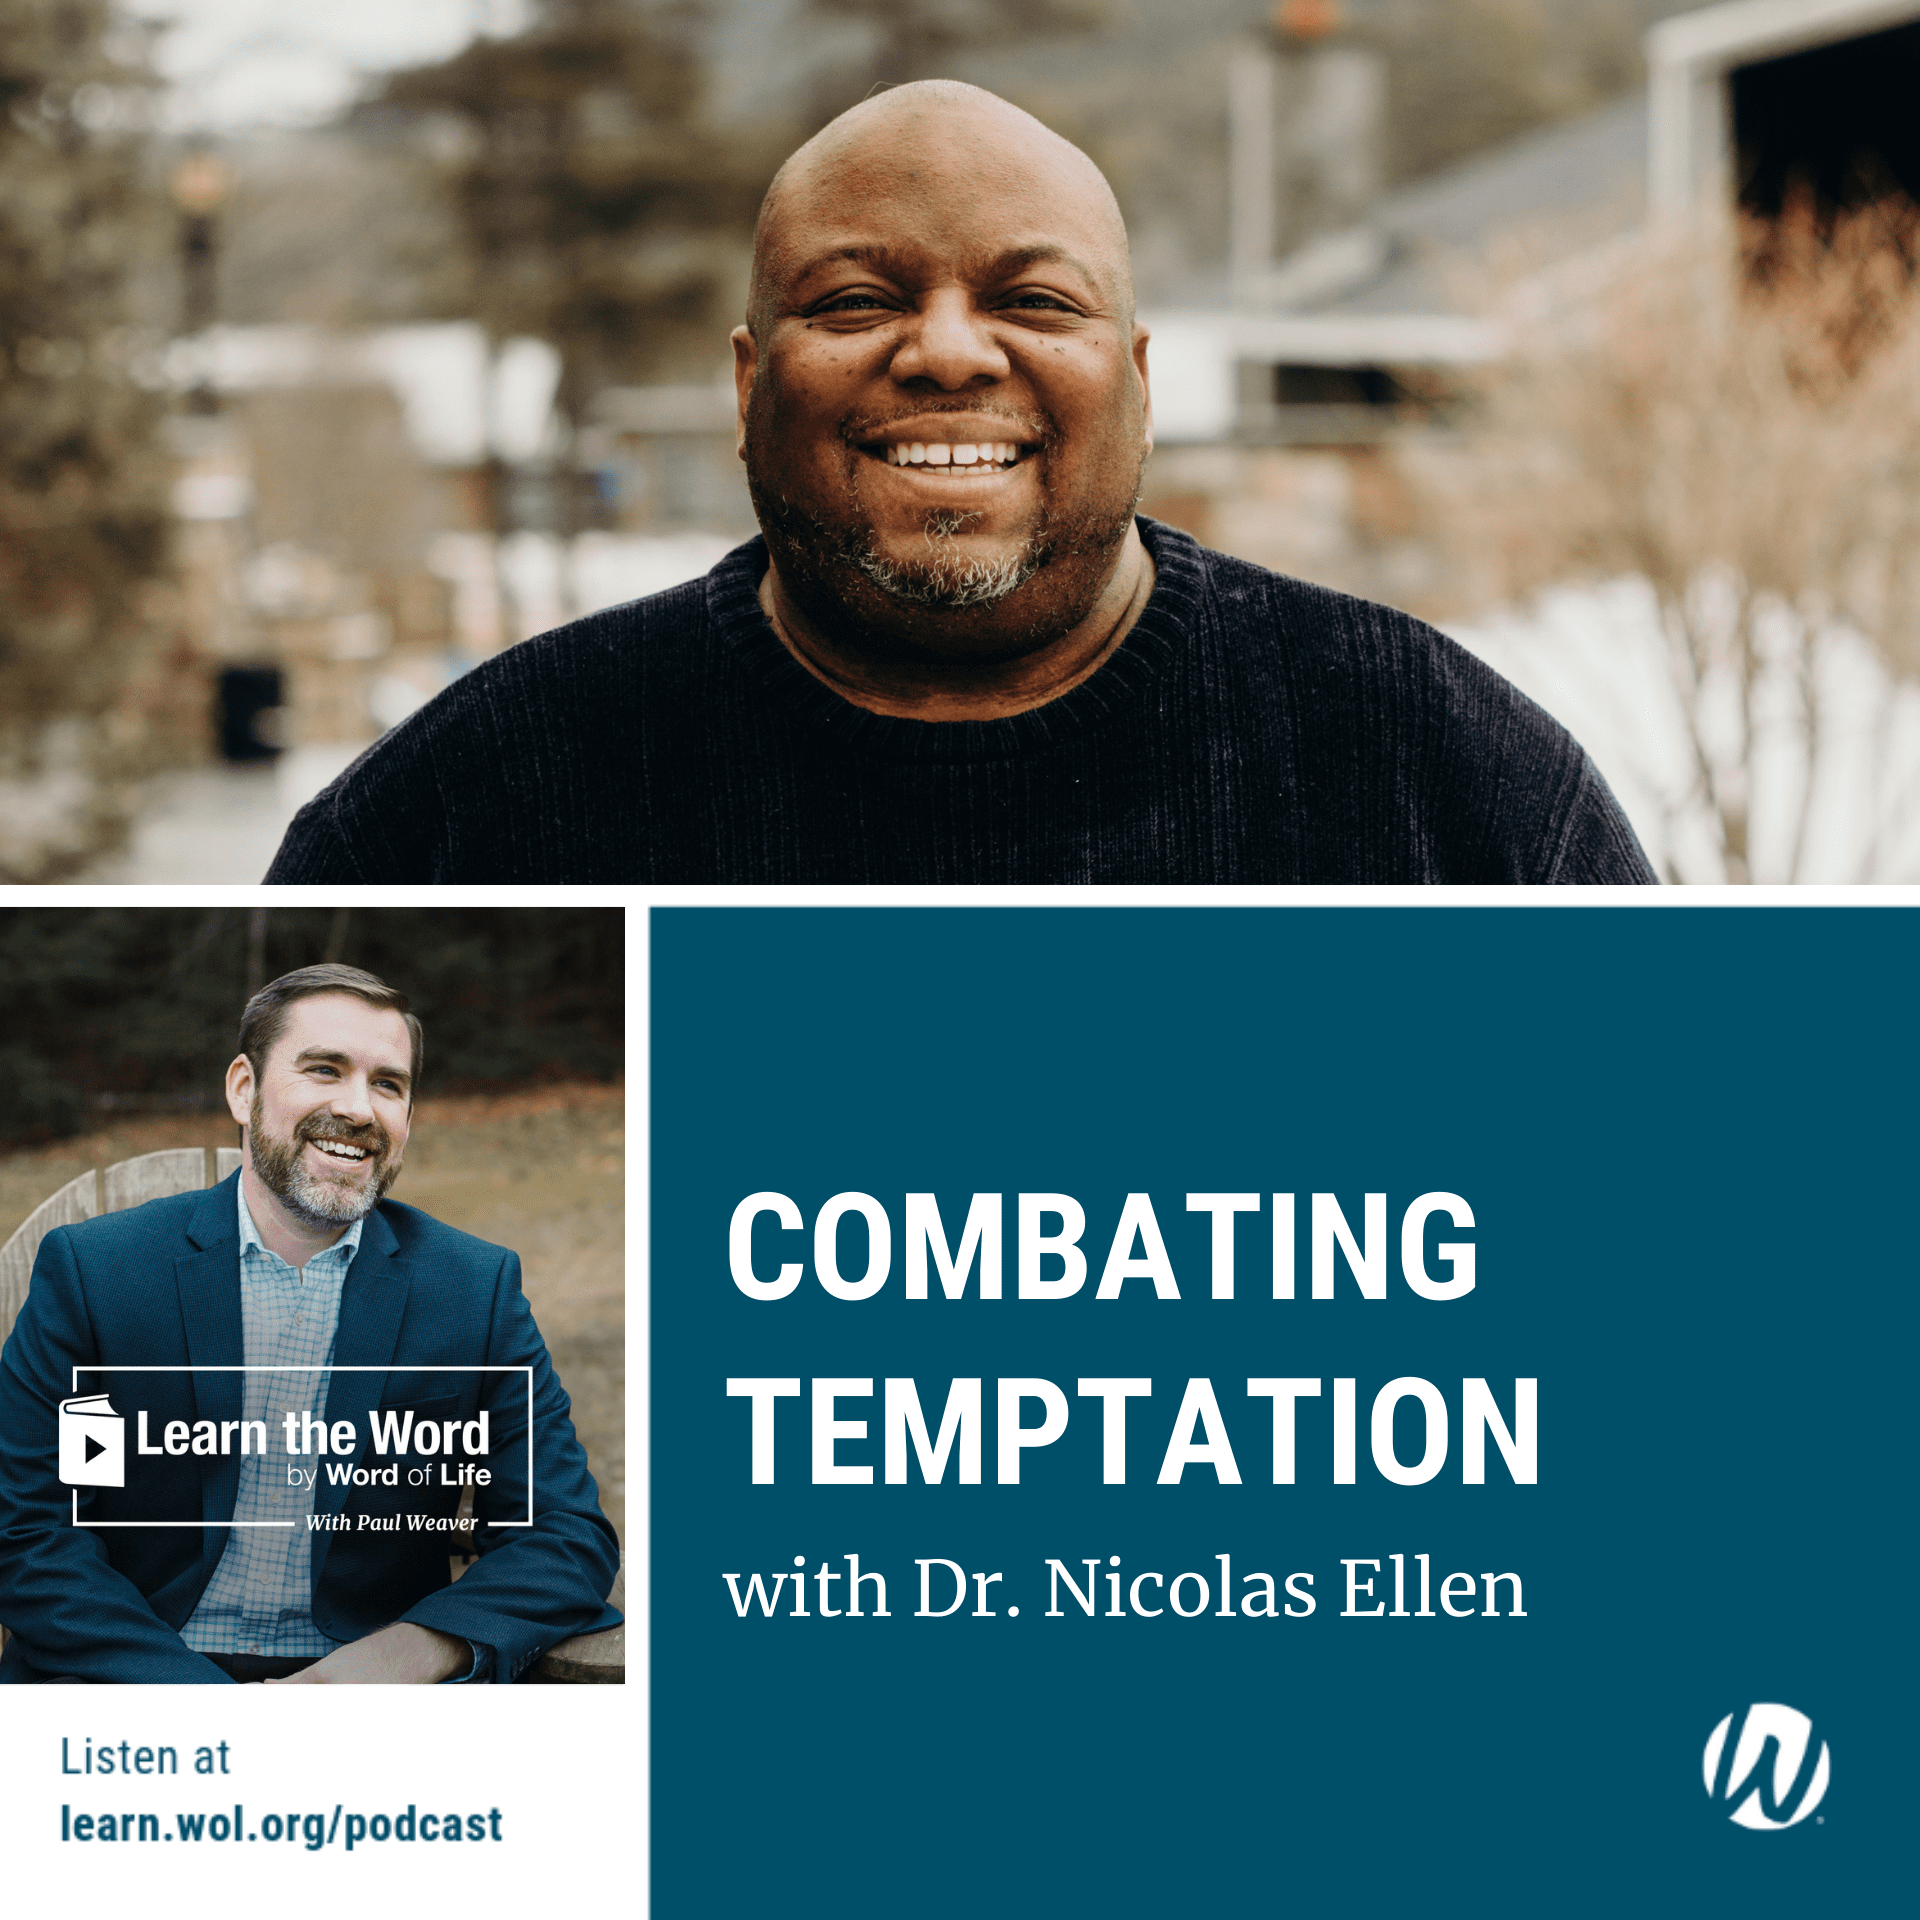 LTW191 - Combating Temptation with Dr. Nicolas Ellen